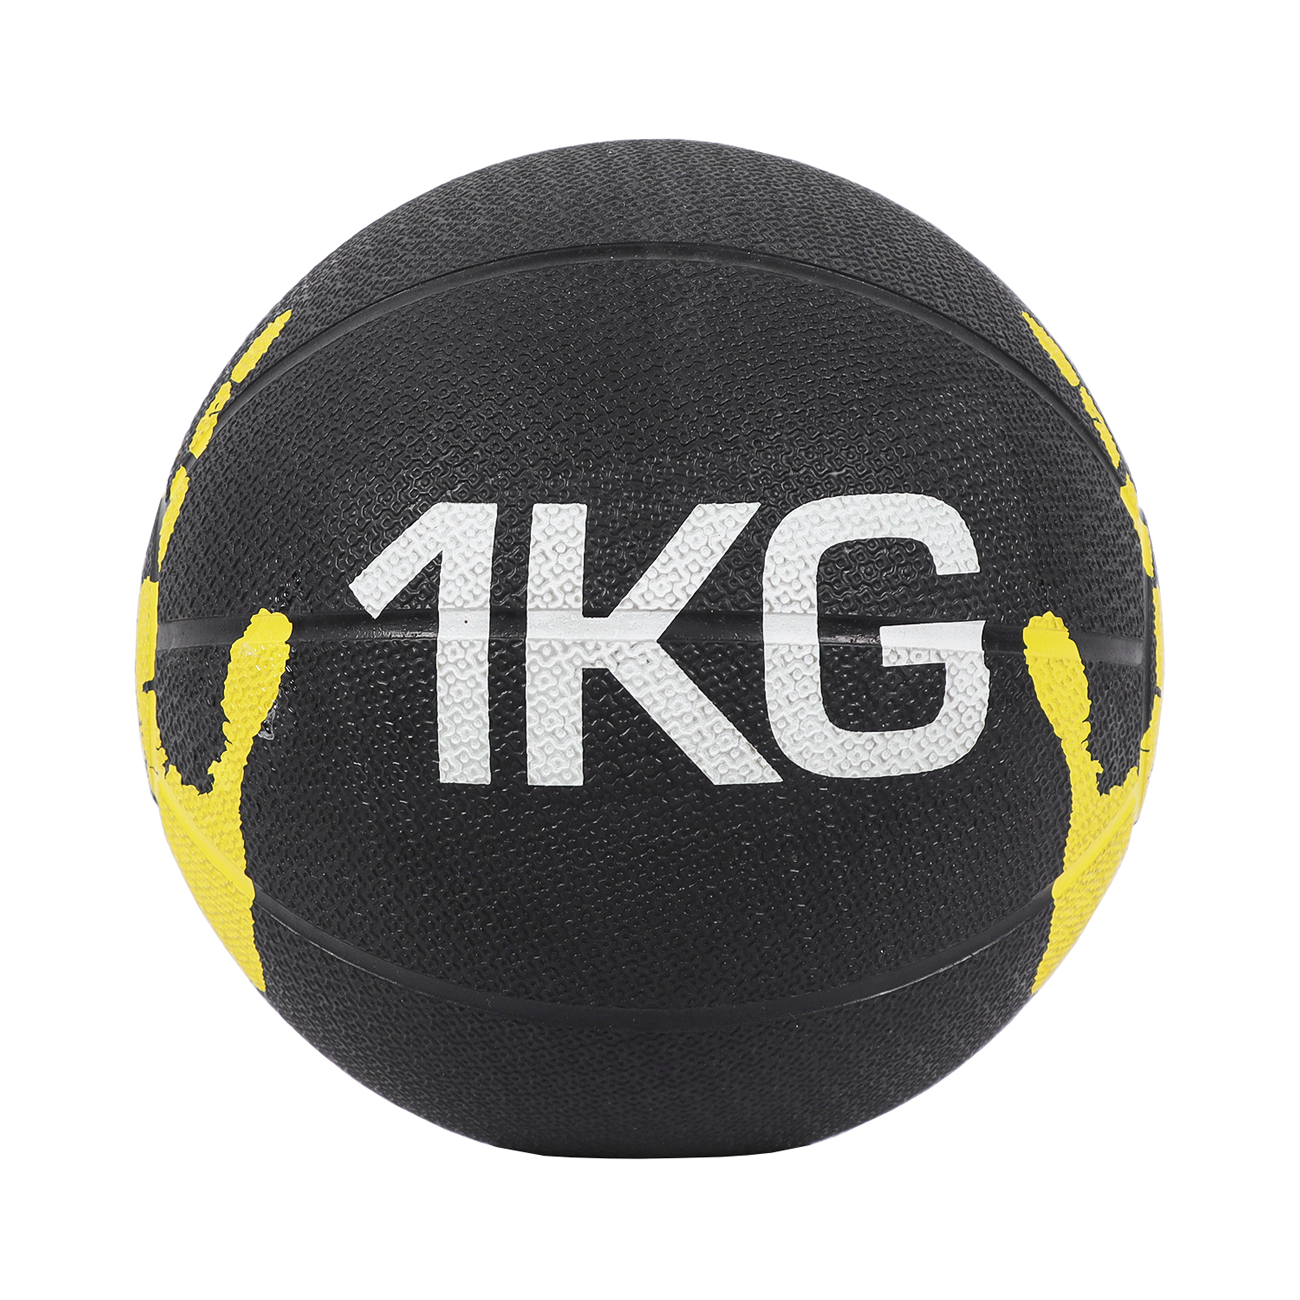  Медицинский мяч "Med Ball" 1 кг